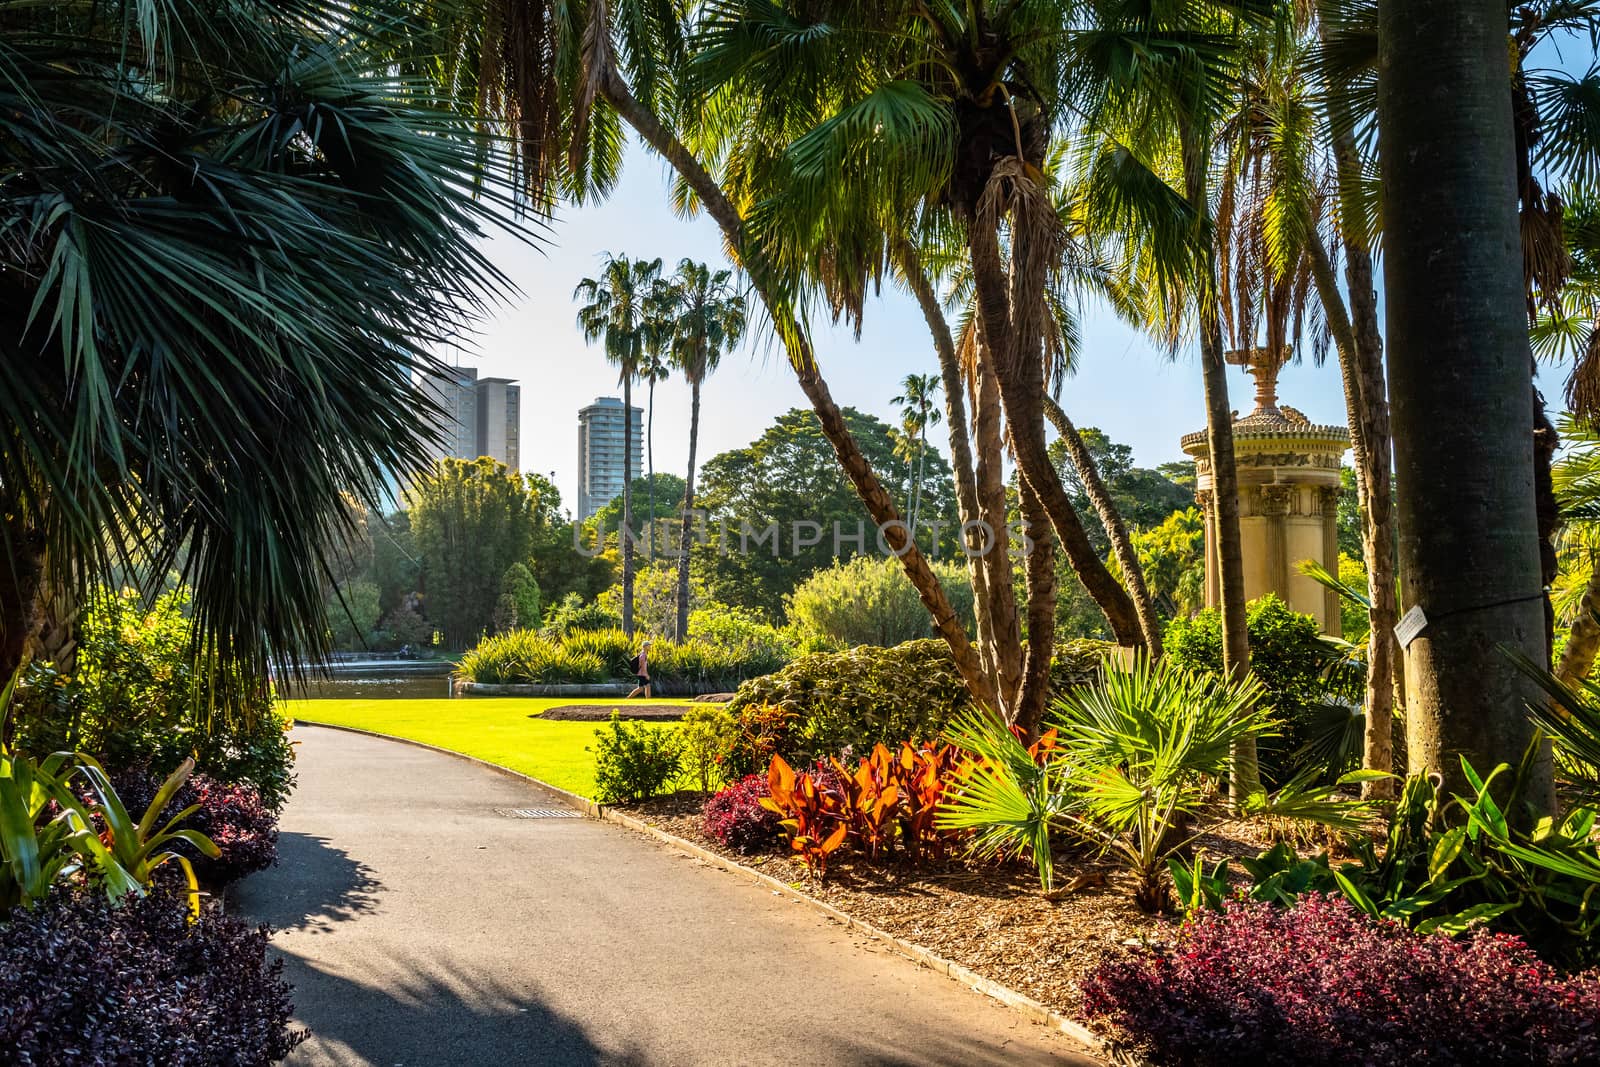 View of the Royal Botanic Garden, Sydney, NSW Australia by mauricallari